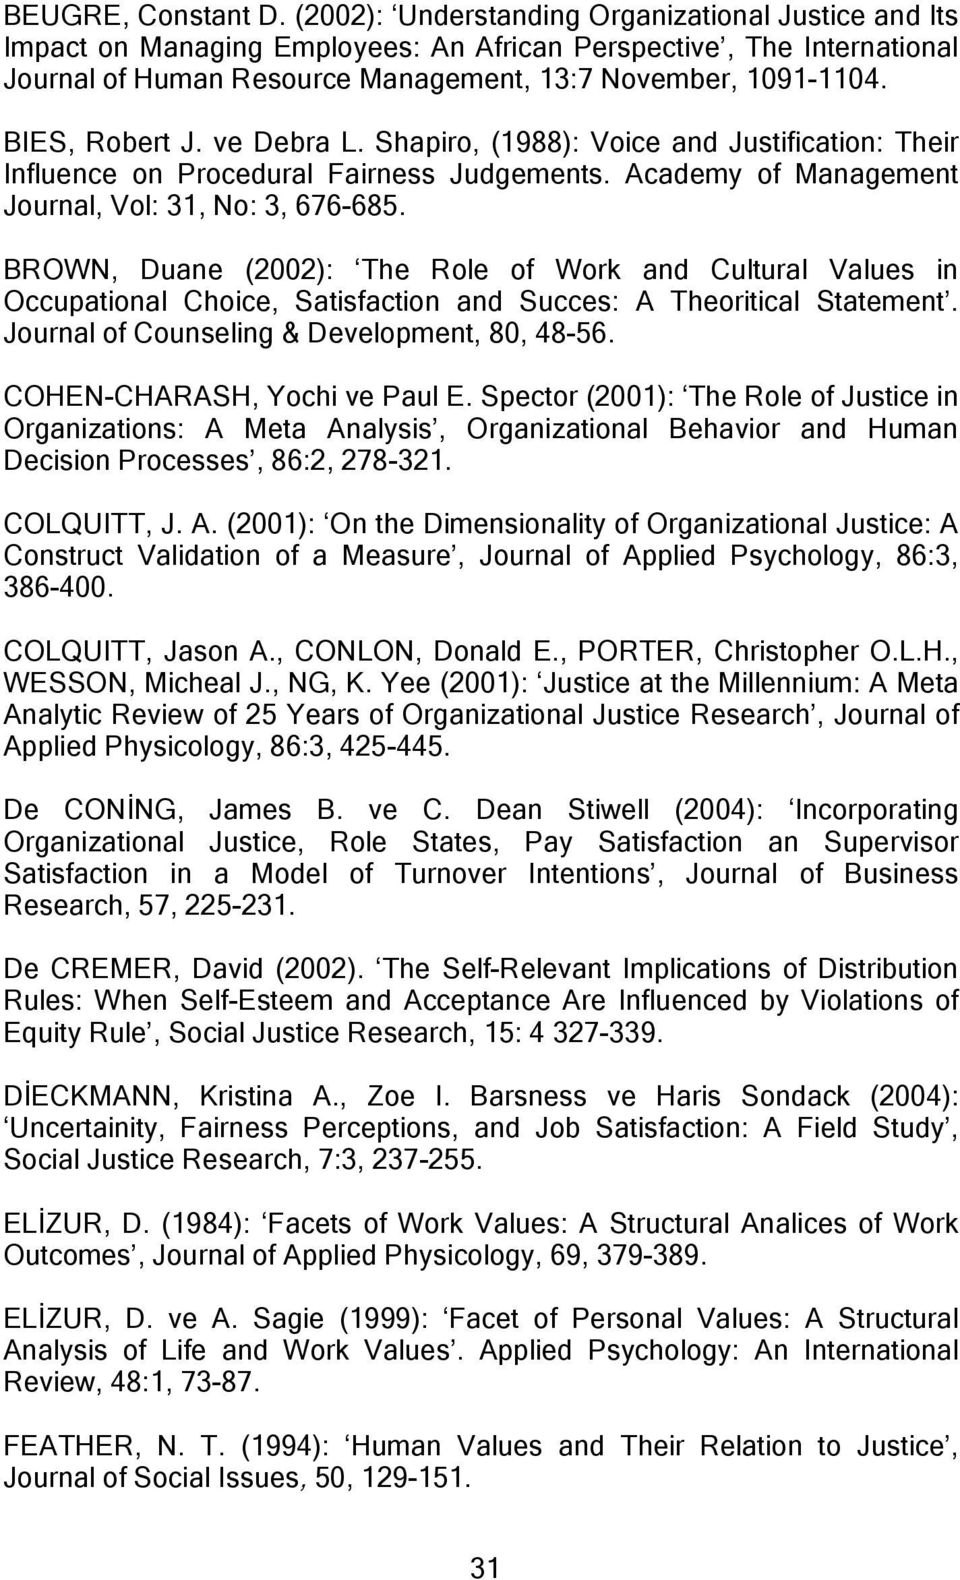 BIES, Robert J. ve Debra L. Shapiro, (1988): Voice and Justification: Their Influence on Procedural Fairness Judgements. Academy of Management Journal, Vol: 31, No: 3, 676-685.